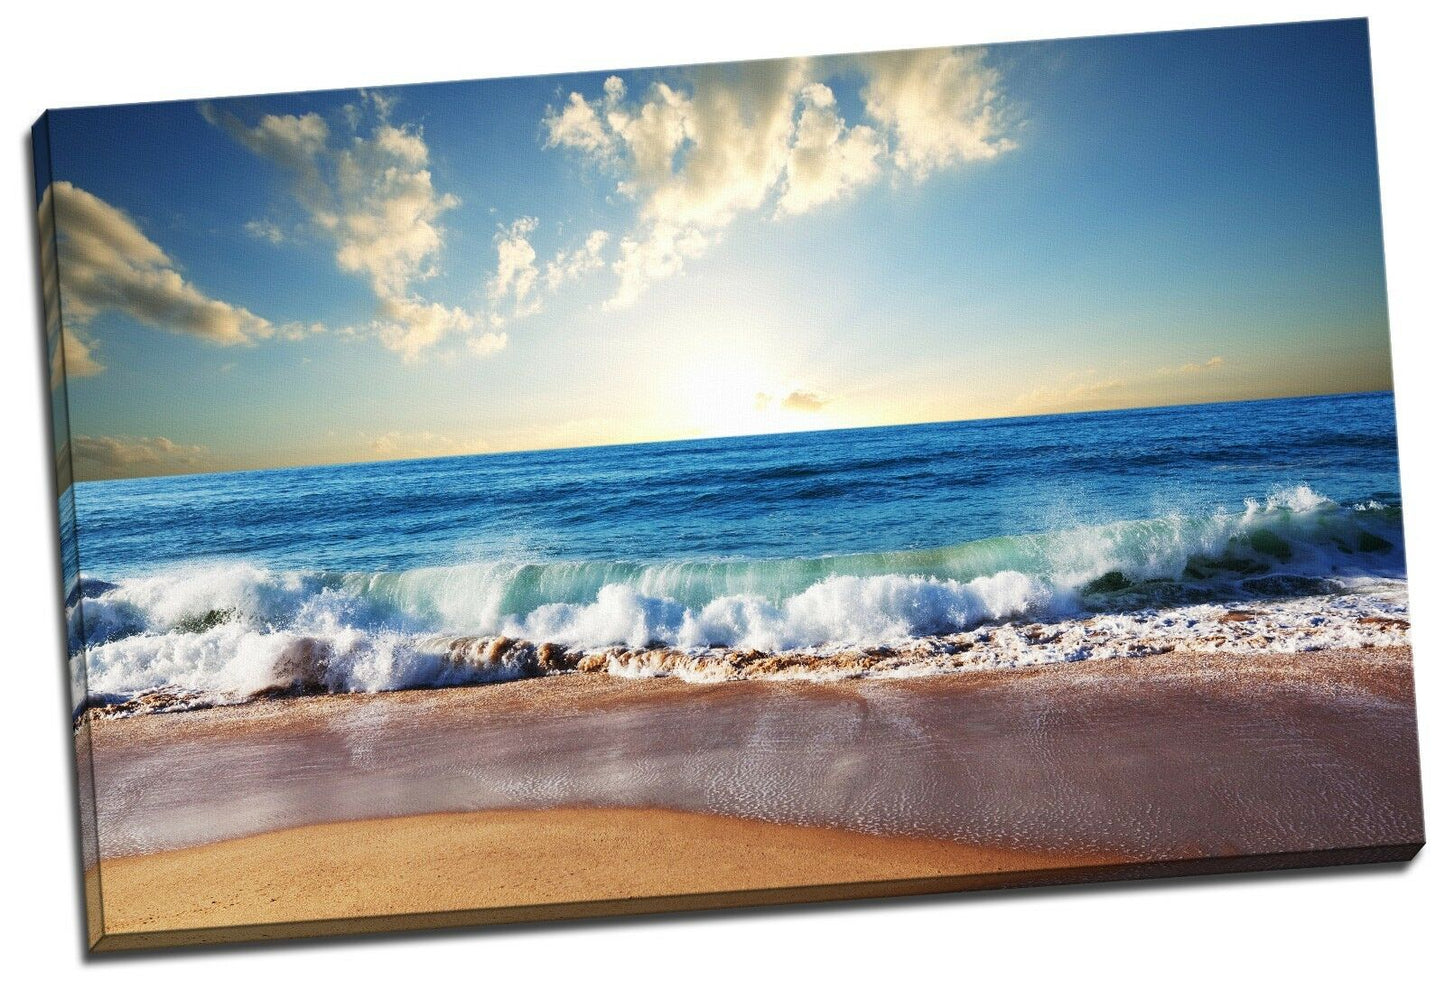 80x50x3cm Framed Canvas Prints Ocean Sea Time Lapse Photo Big Wall Art